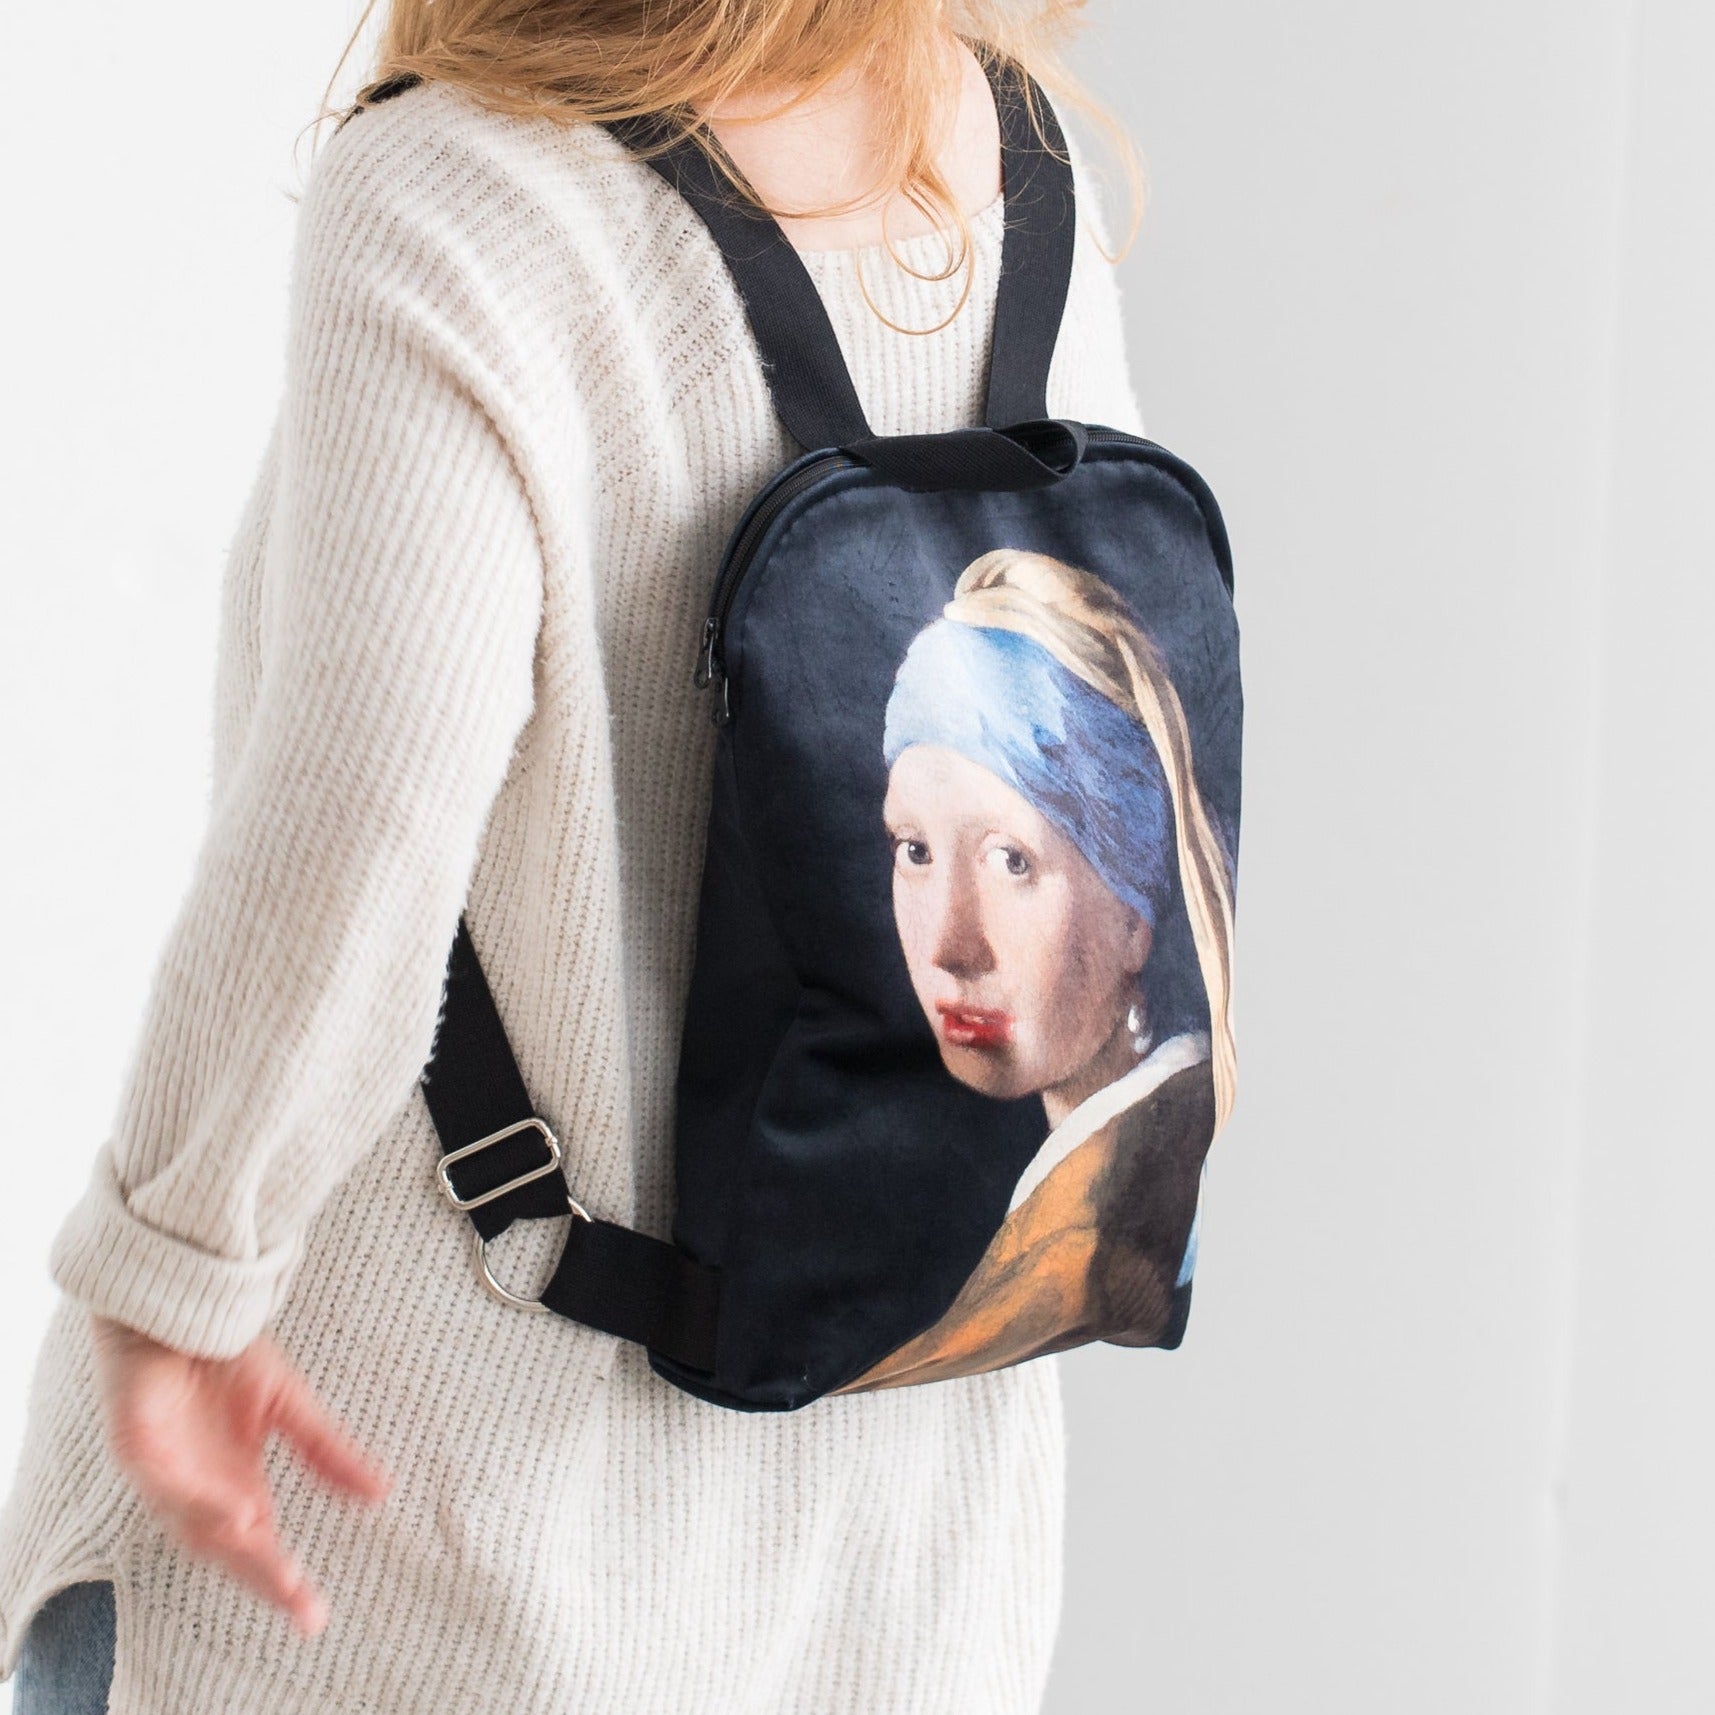 Kuprinė Johannes Vermeer "Girl with a pearl Earring"